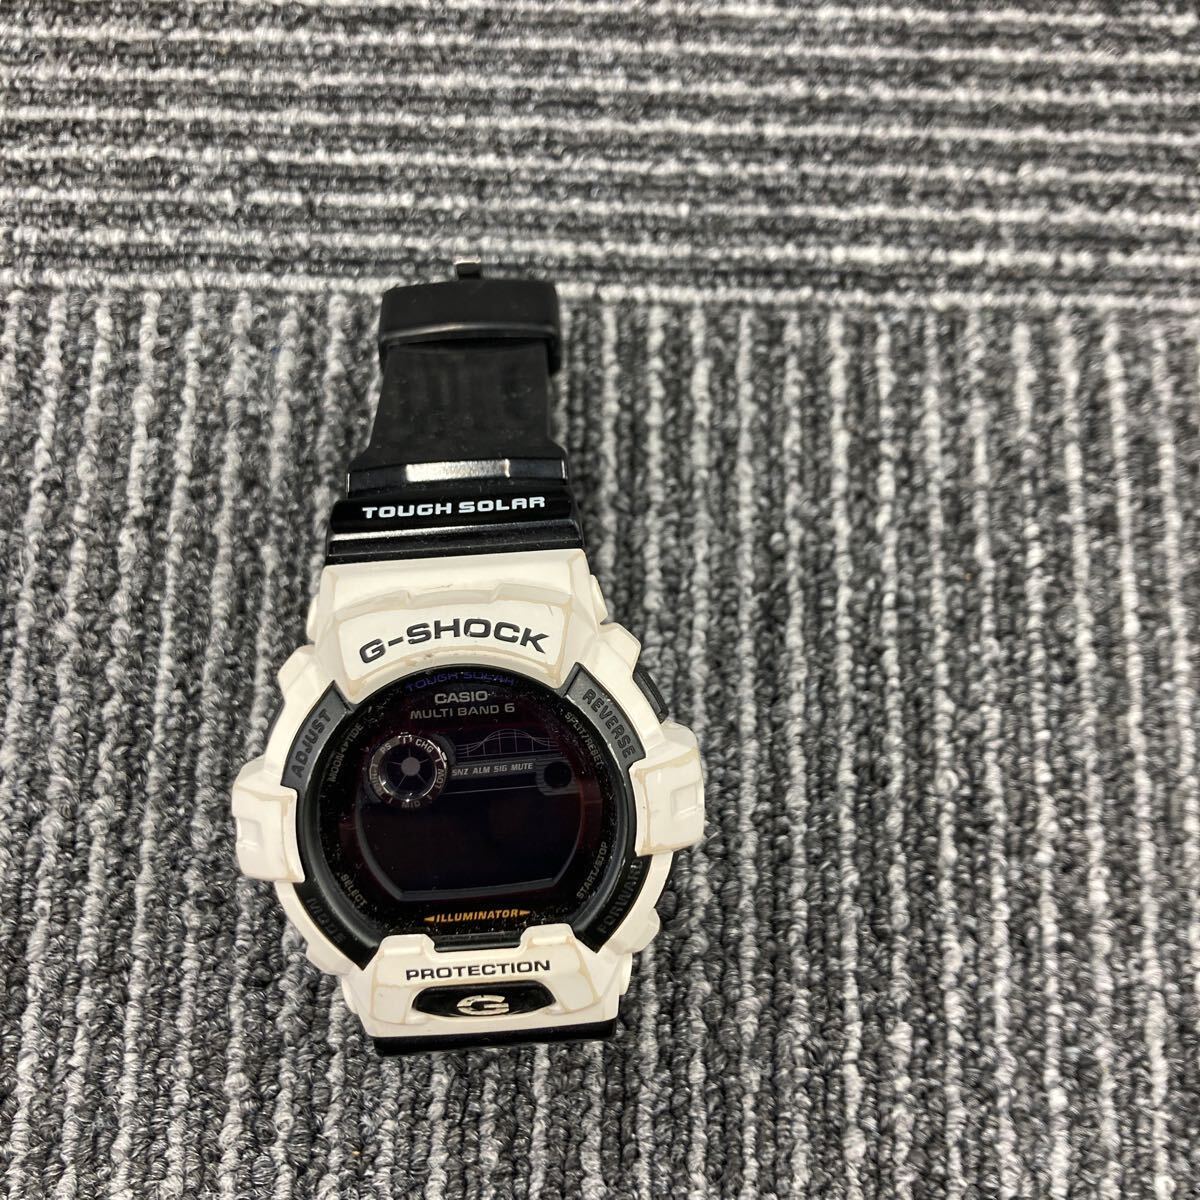 。G-SHOCK PROTECTION TOUGHSOLAR 腕時計 デジタル時計 ブラック×ホワイト ジーショック オールステンレスの画像2